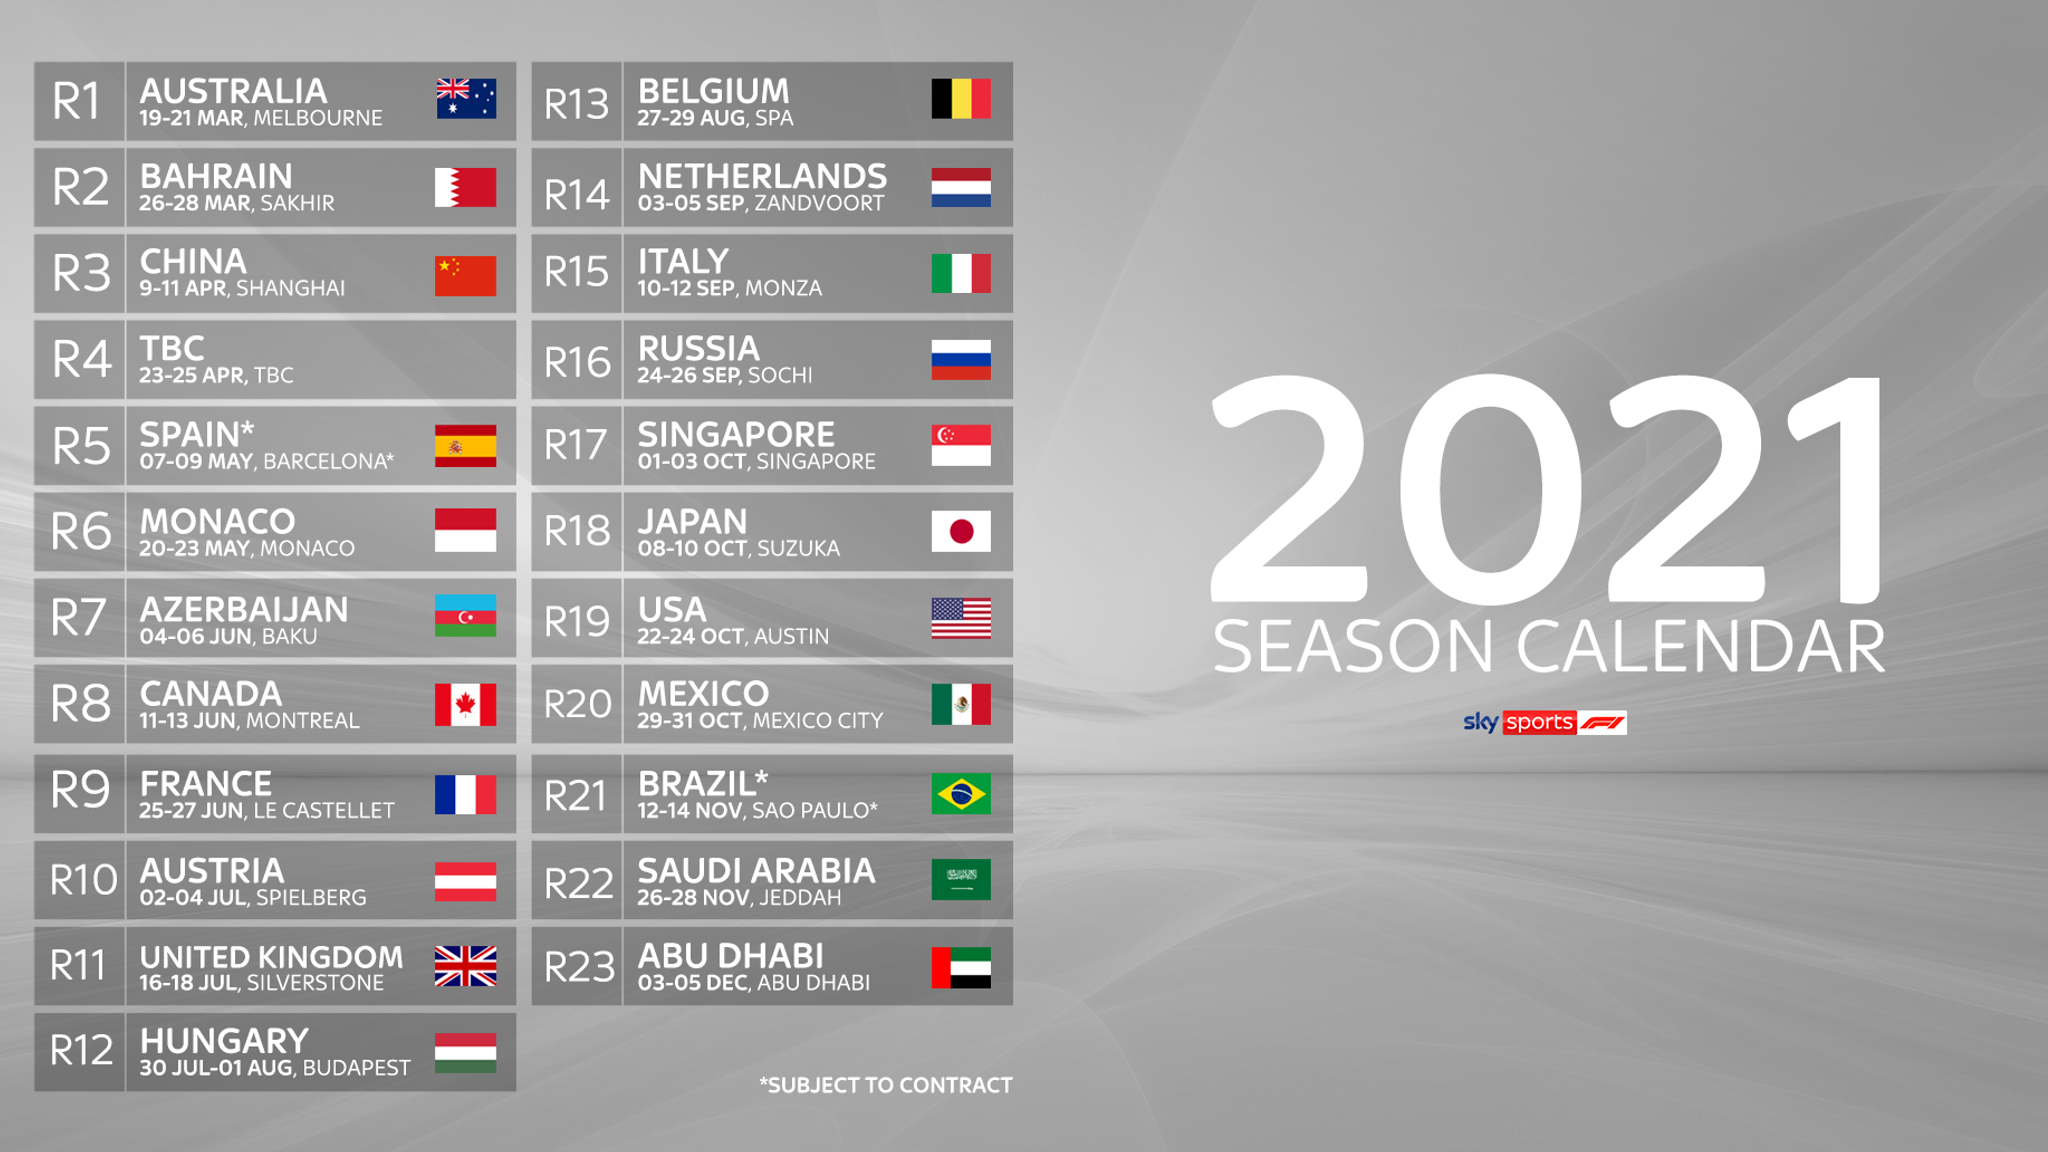 Race Kalender F1 2021 Formula 1 Reveals Record Length Race Calendar For 2021 Season F1 News